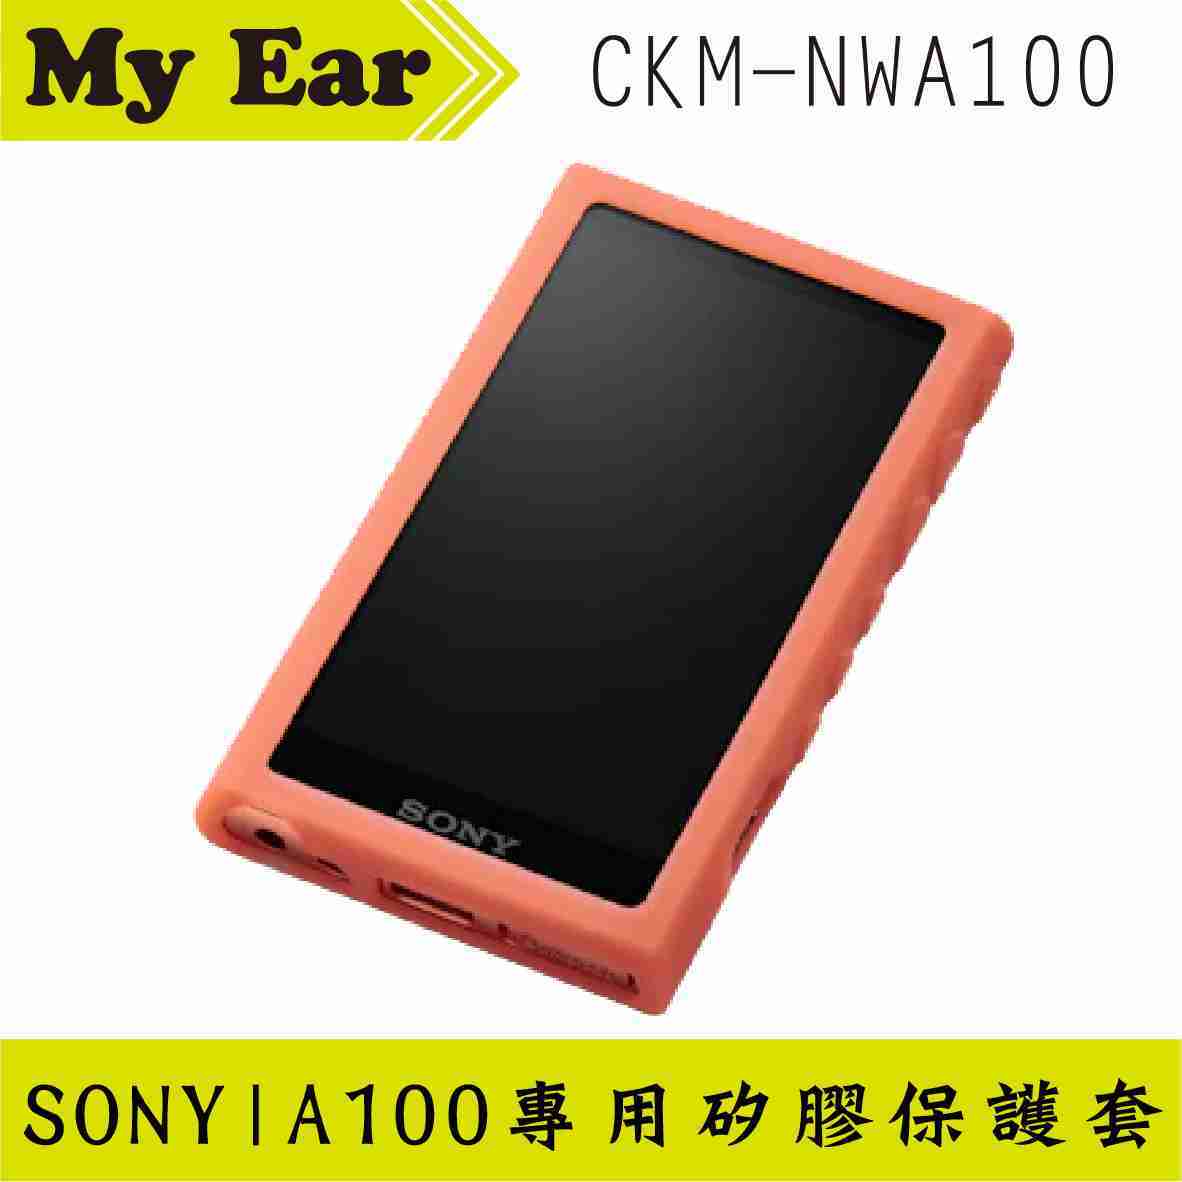 SONY 索尼 CKM-NWA100 黑色 Walkman® 專用矽膠保護殼 | My Ear 耳機專門店